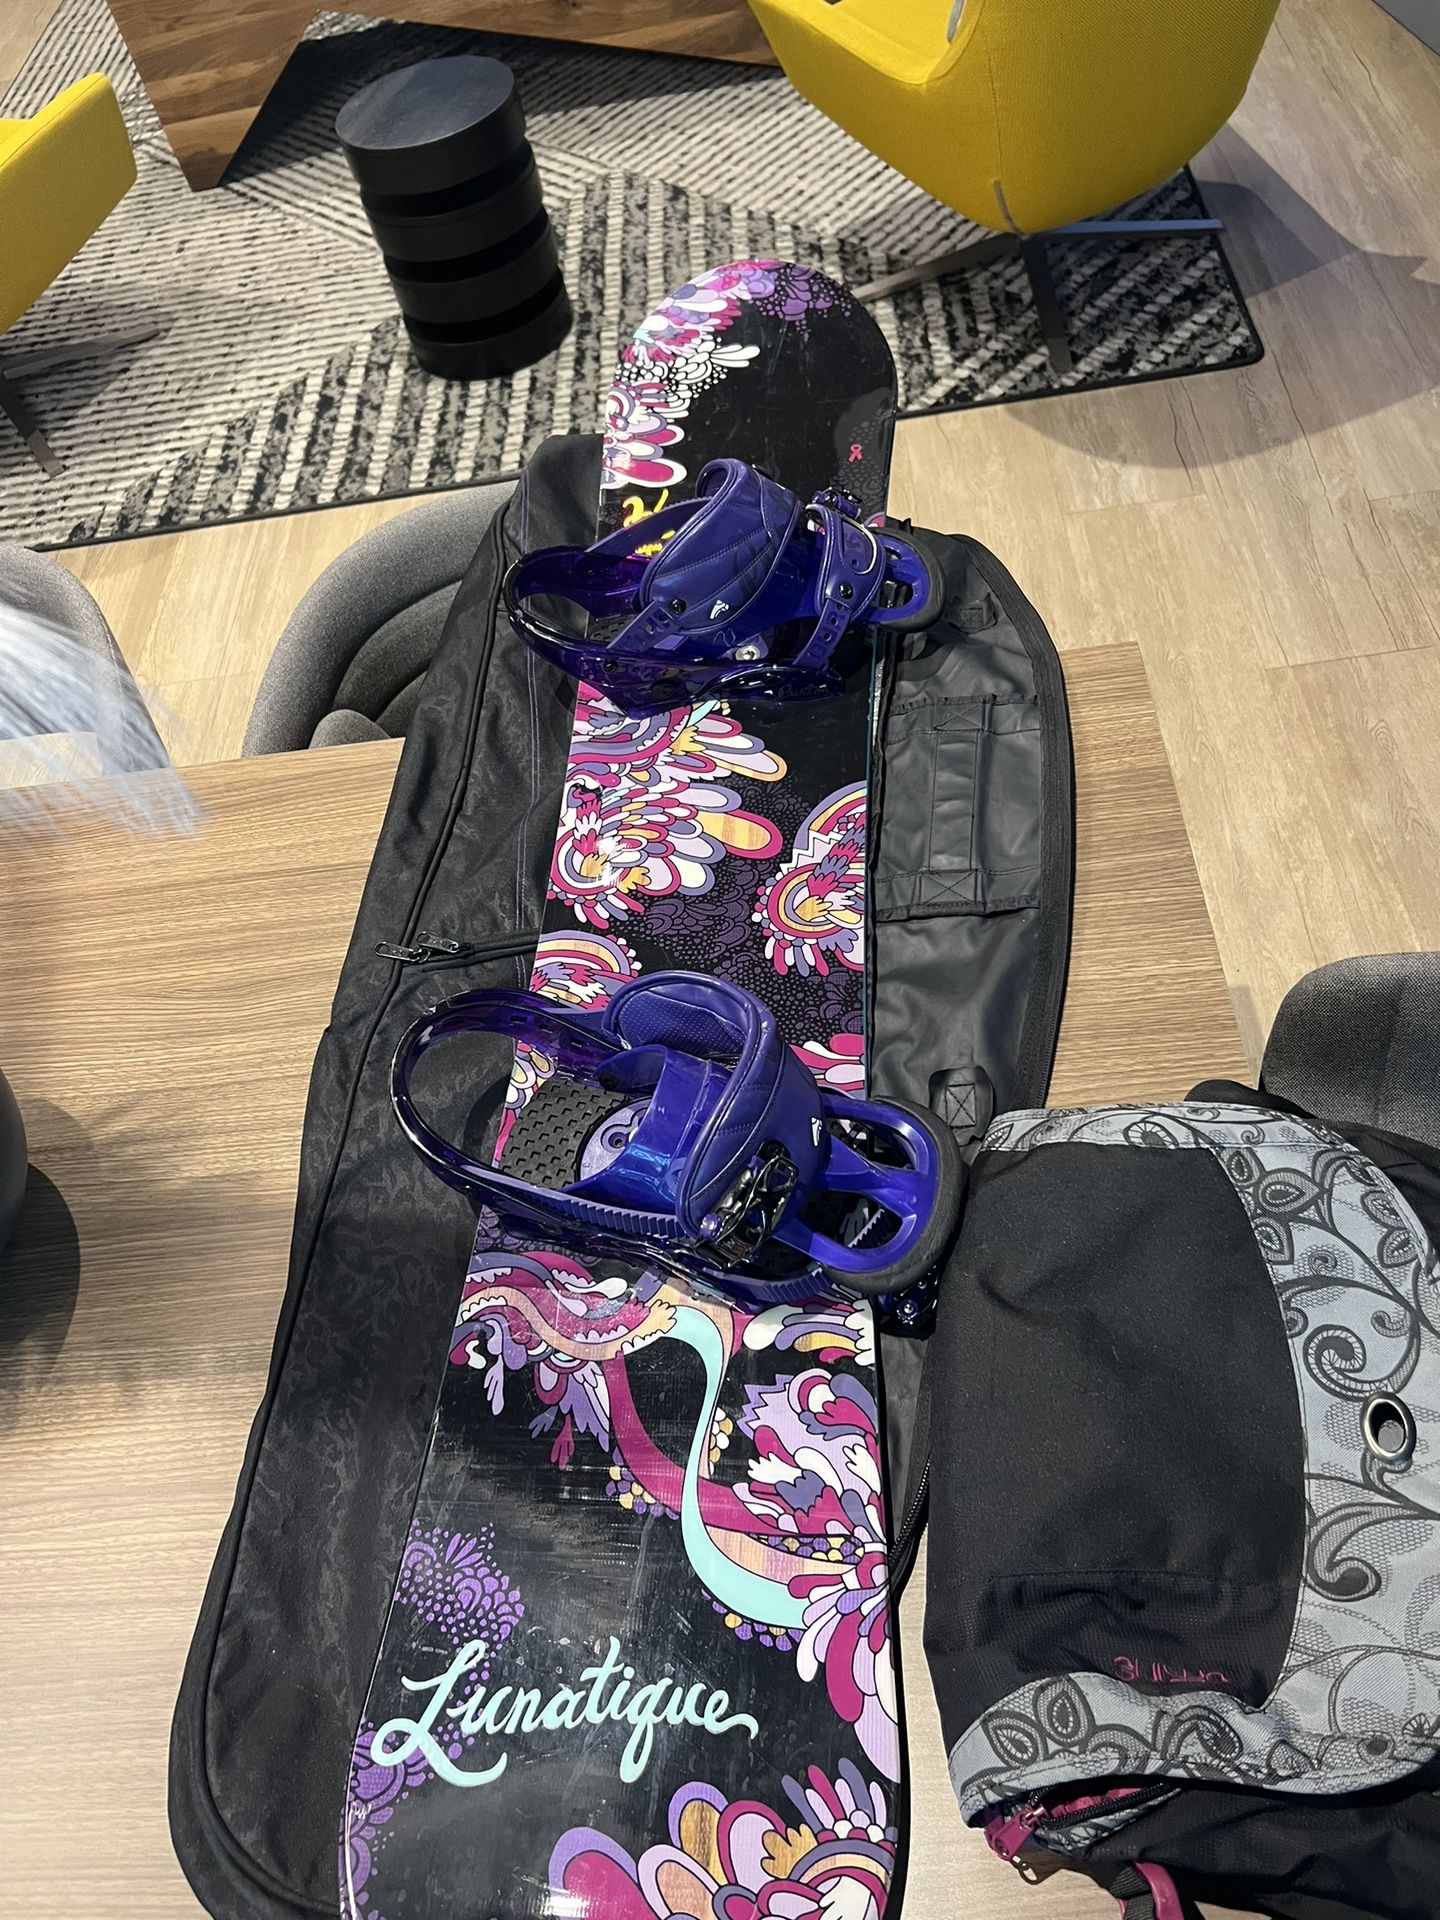 K2 Lunatique Snowboard w/ Bindings, Case and Accessory Bag